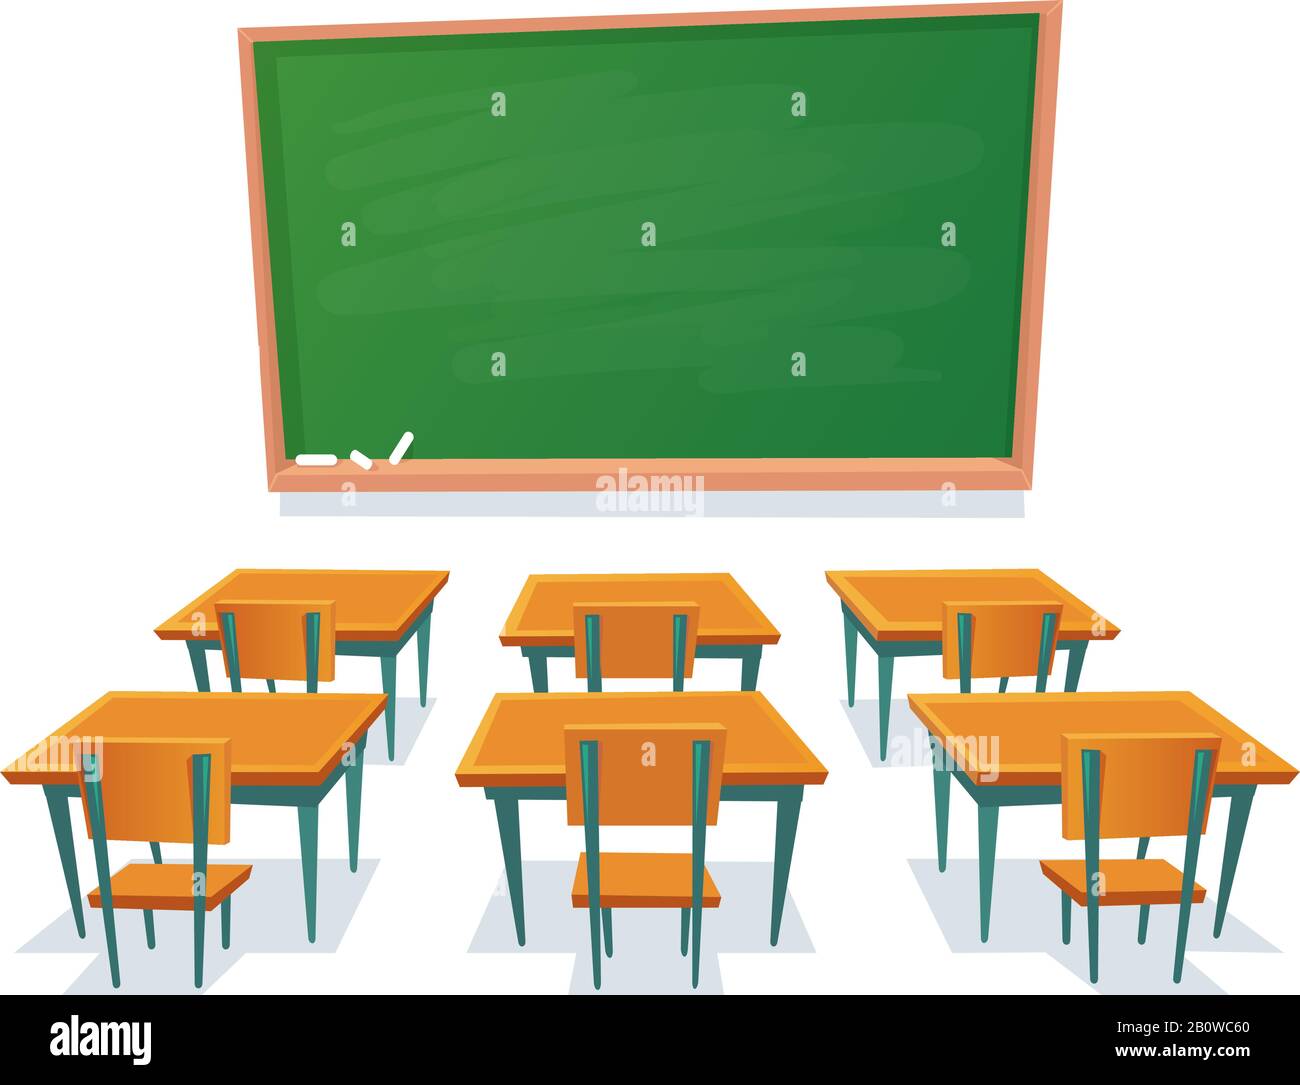 School chalkboard and desks. Empty blackboard, classroom wooden desk and chair isolated cartoon vector illustration Stock Vector